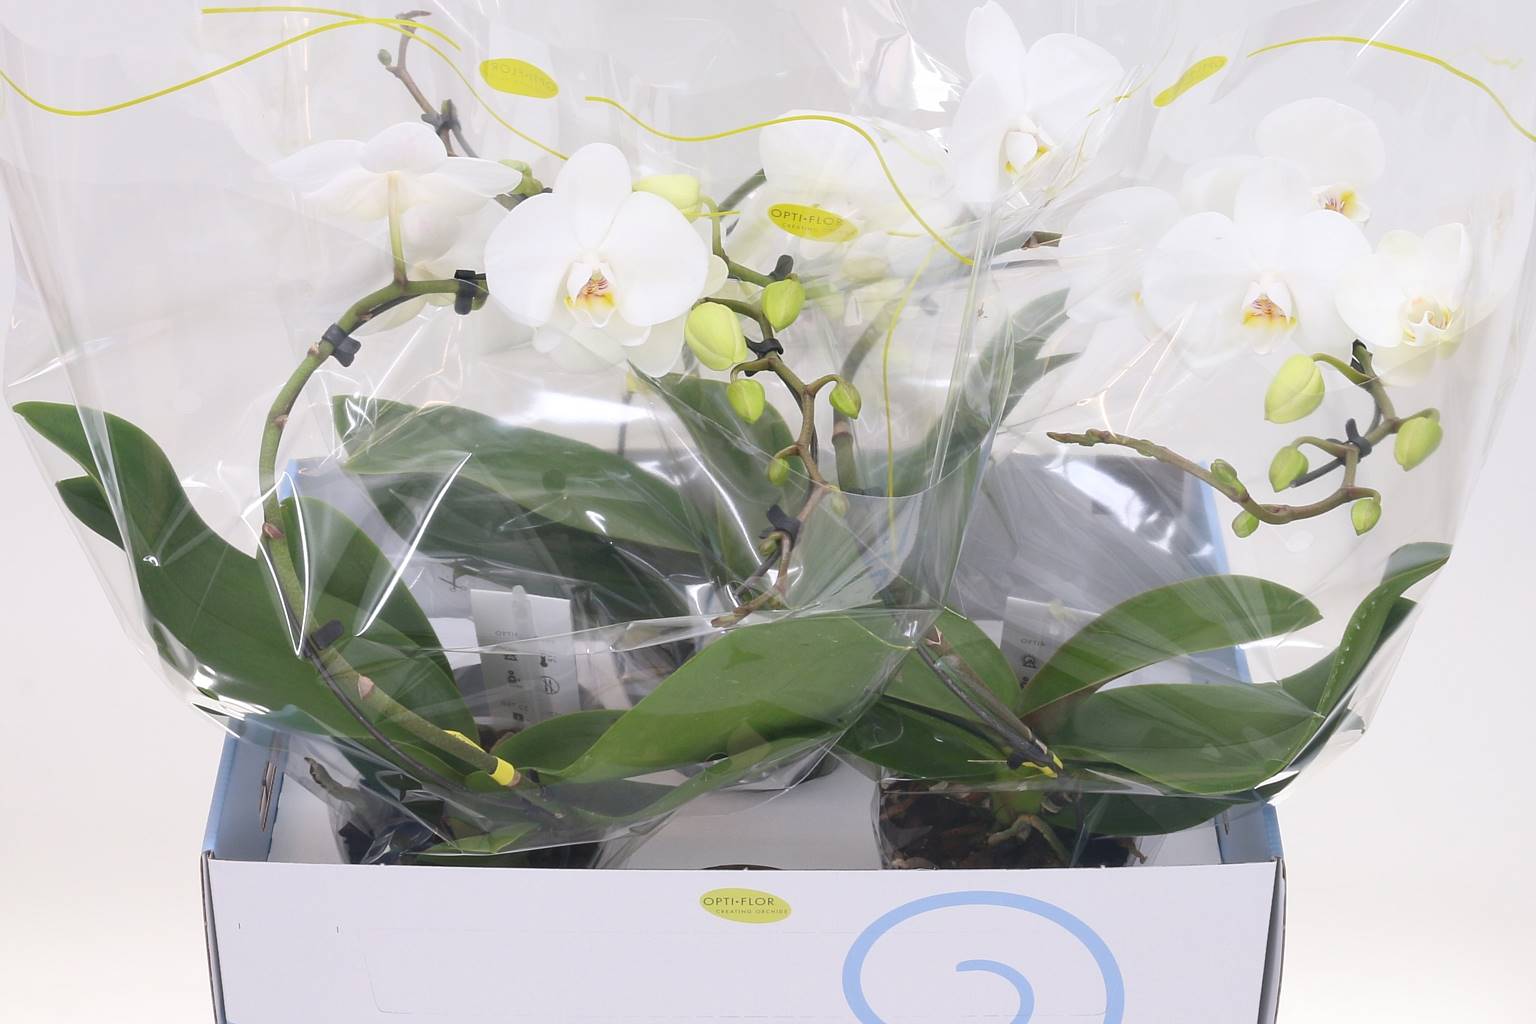 Фаленопсис Балетто Крыло Белое ( Phalaenopsis Baletto Wing White ) W 12 см H 45 см